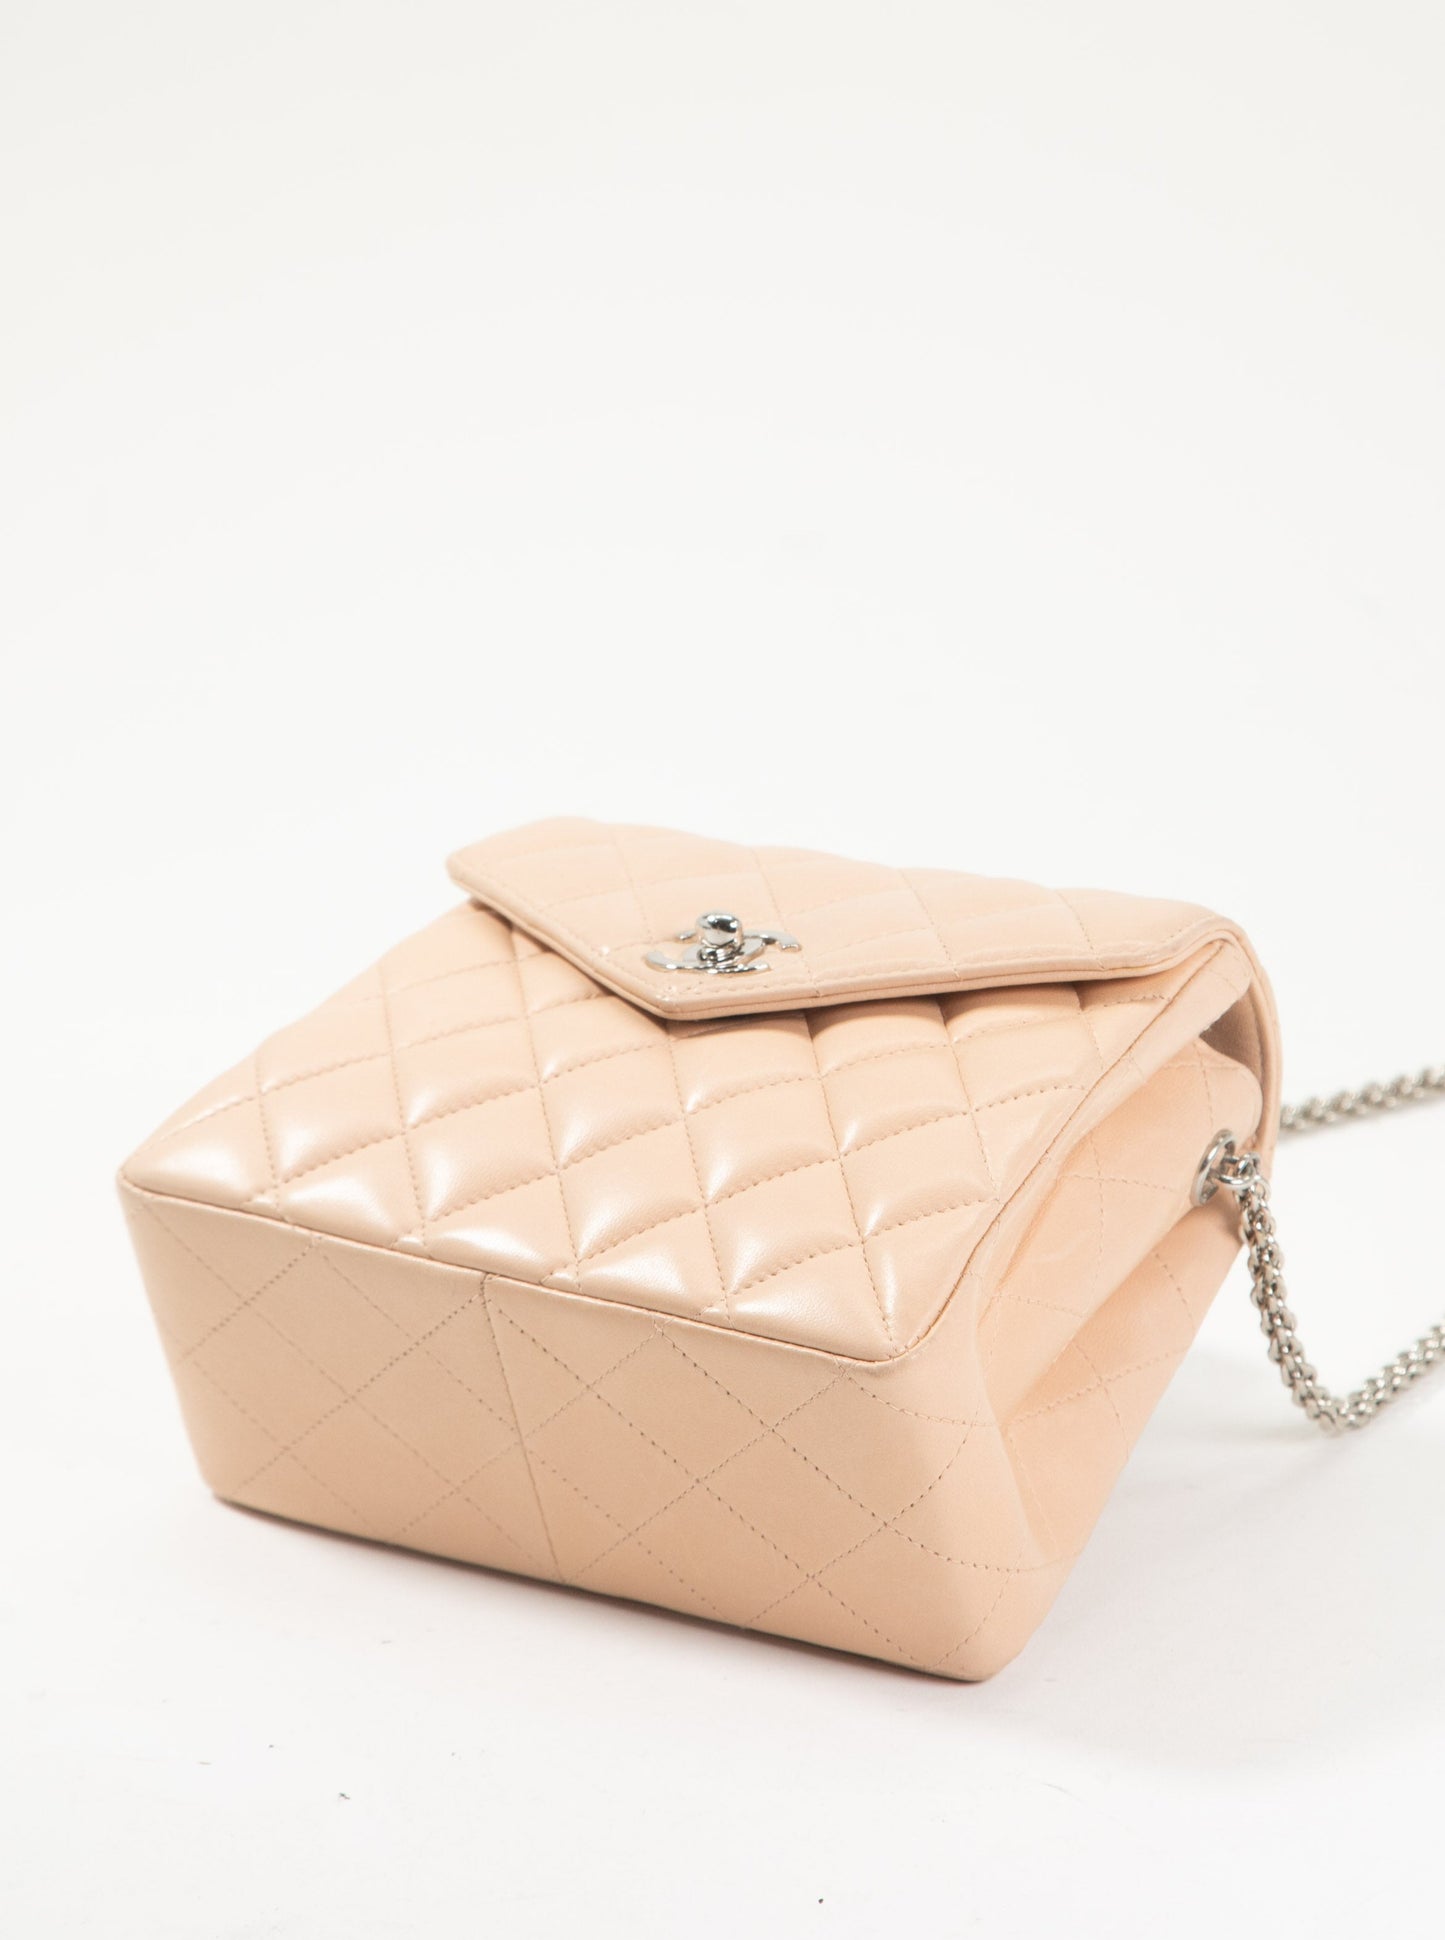 Chanel Single V Flap Matelasse Chain Shoulder Bag Lambskin Beige